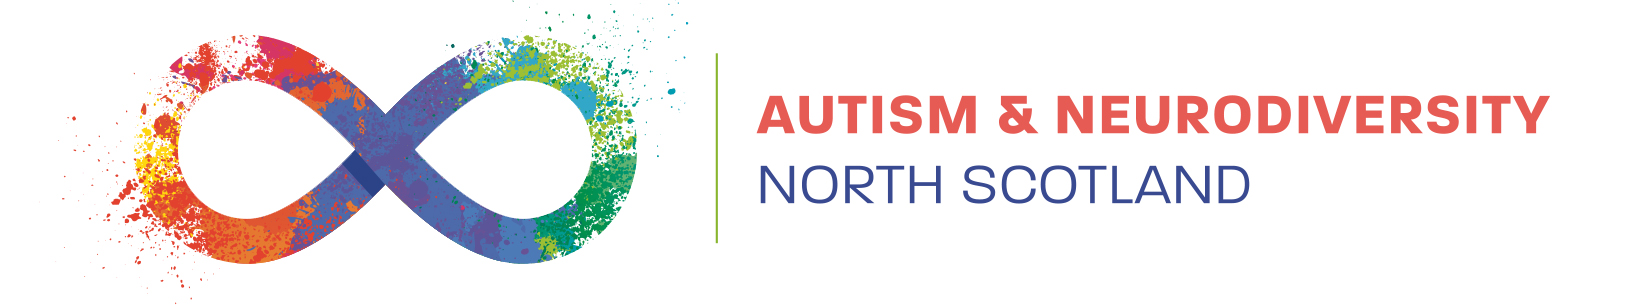 Autism and Neurodiversity North Scotland (A-ND) Logo